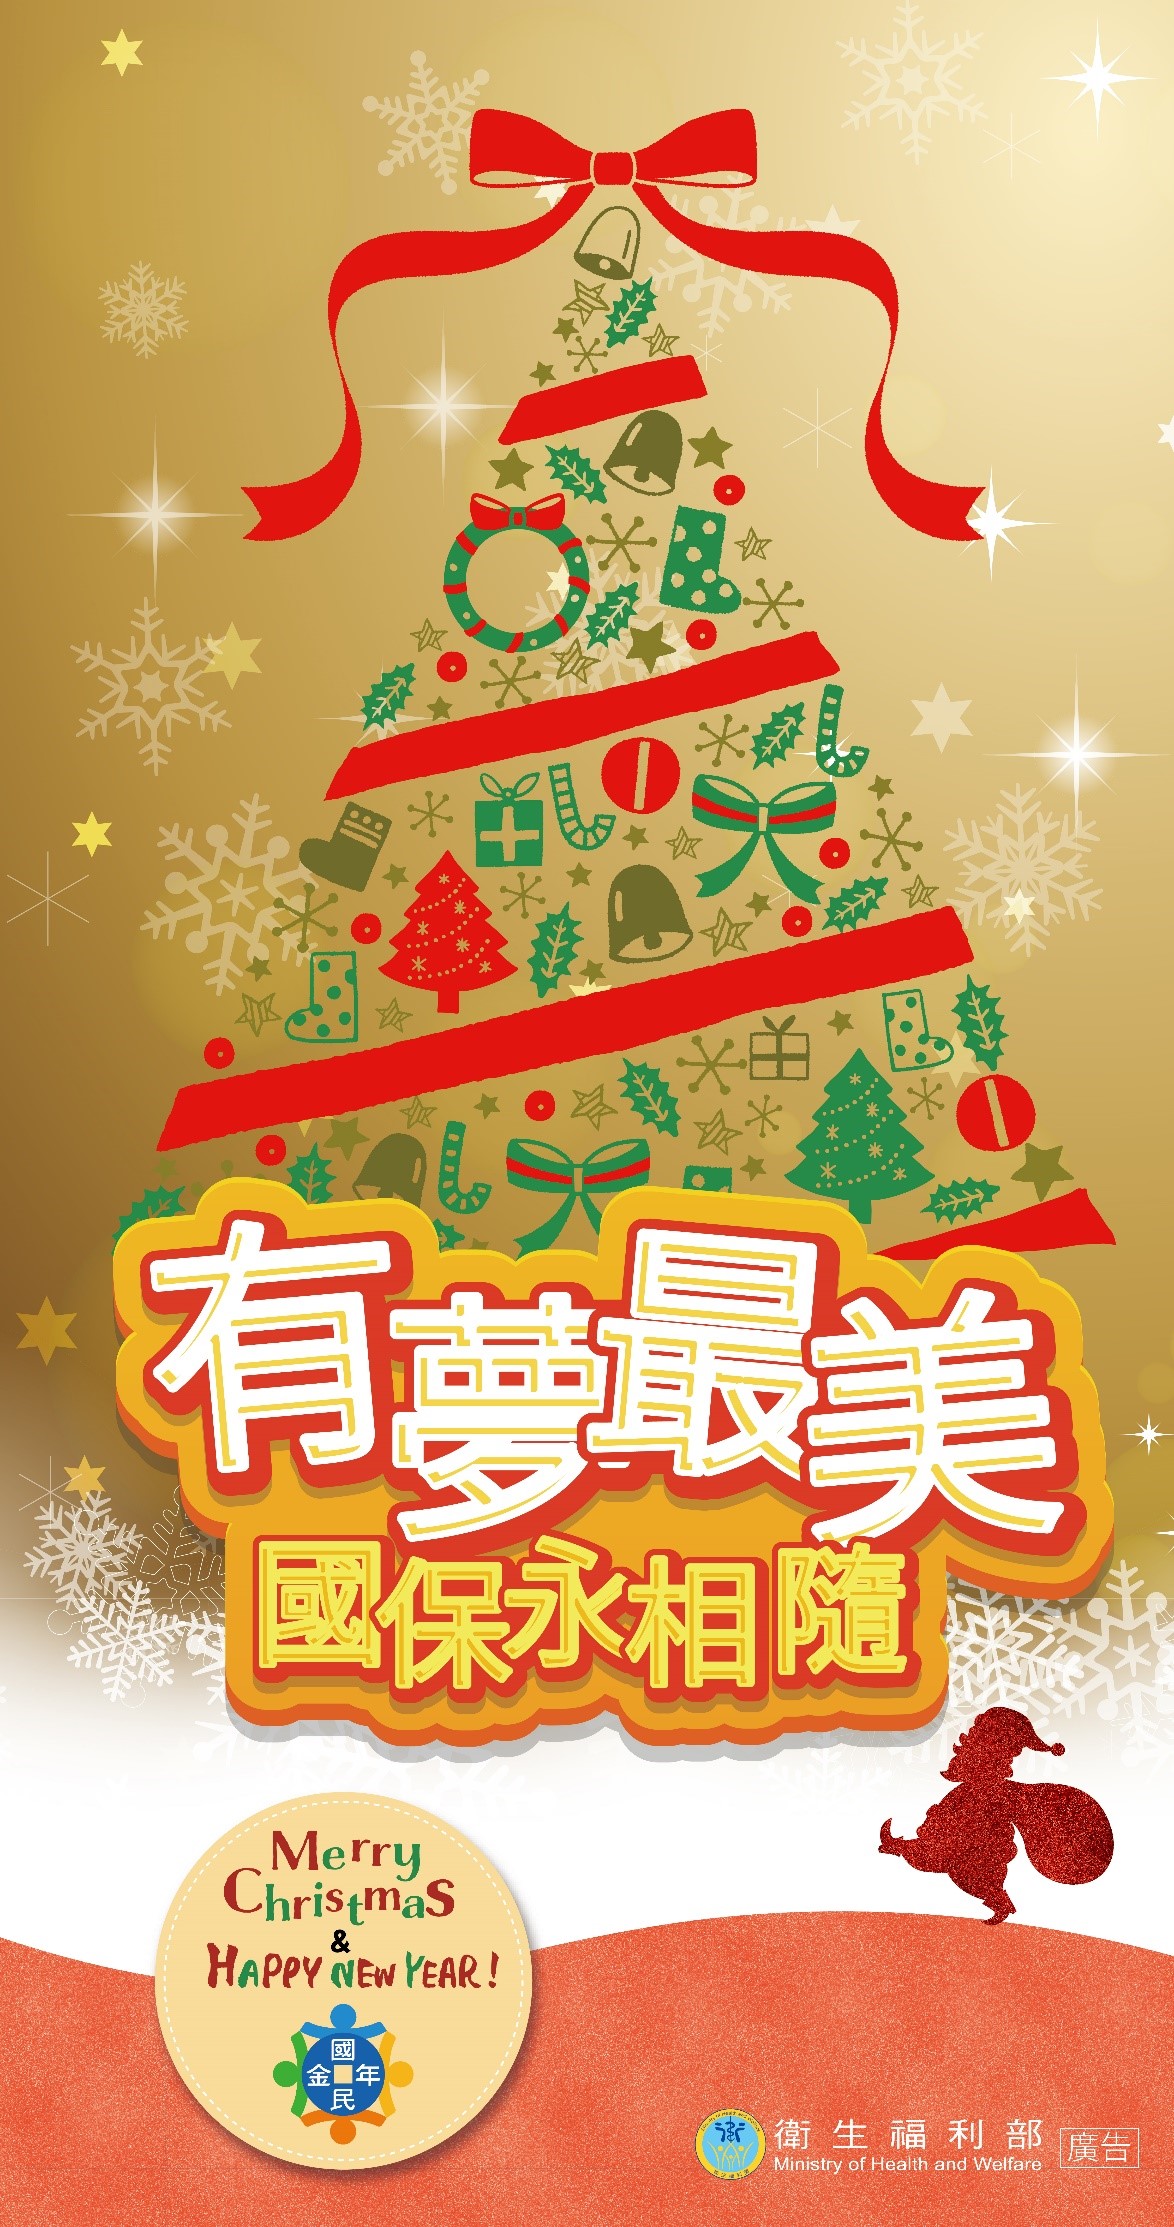 Merry Chrismas & Happy New Year 有夢最美 國保永相隨(直式)